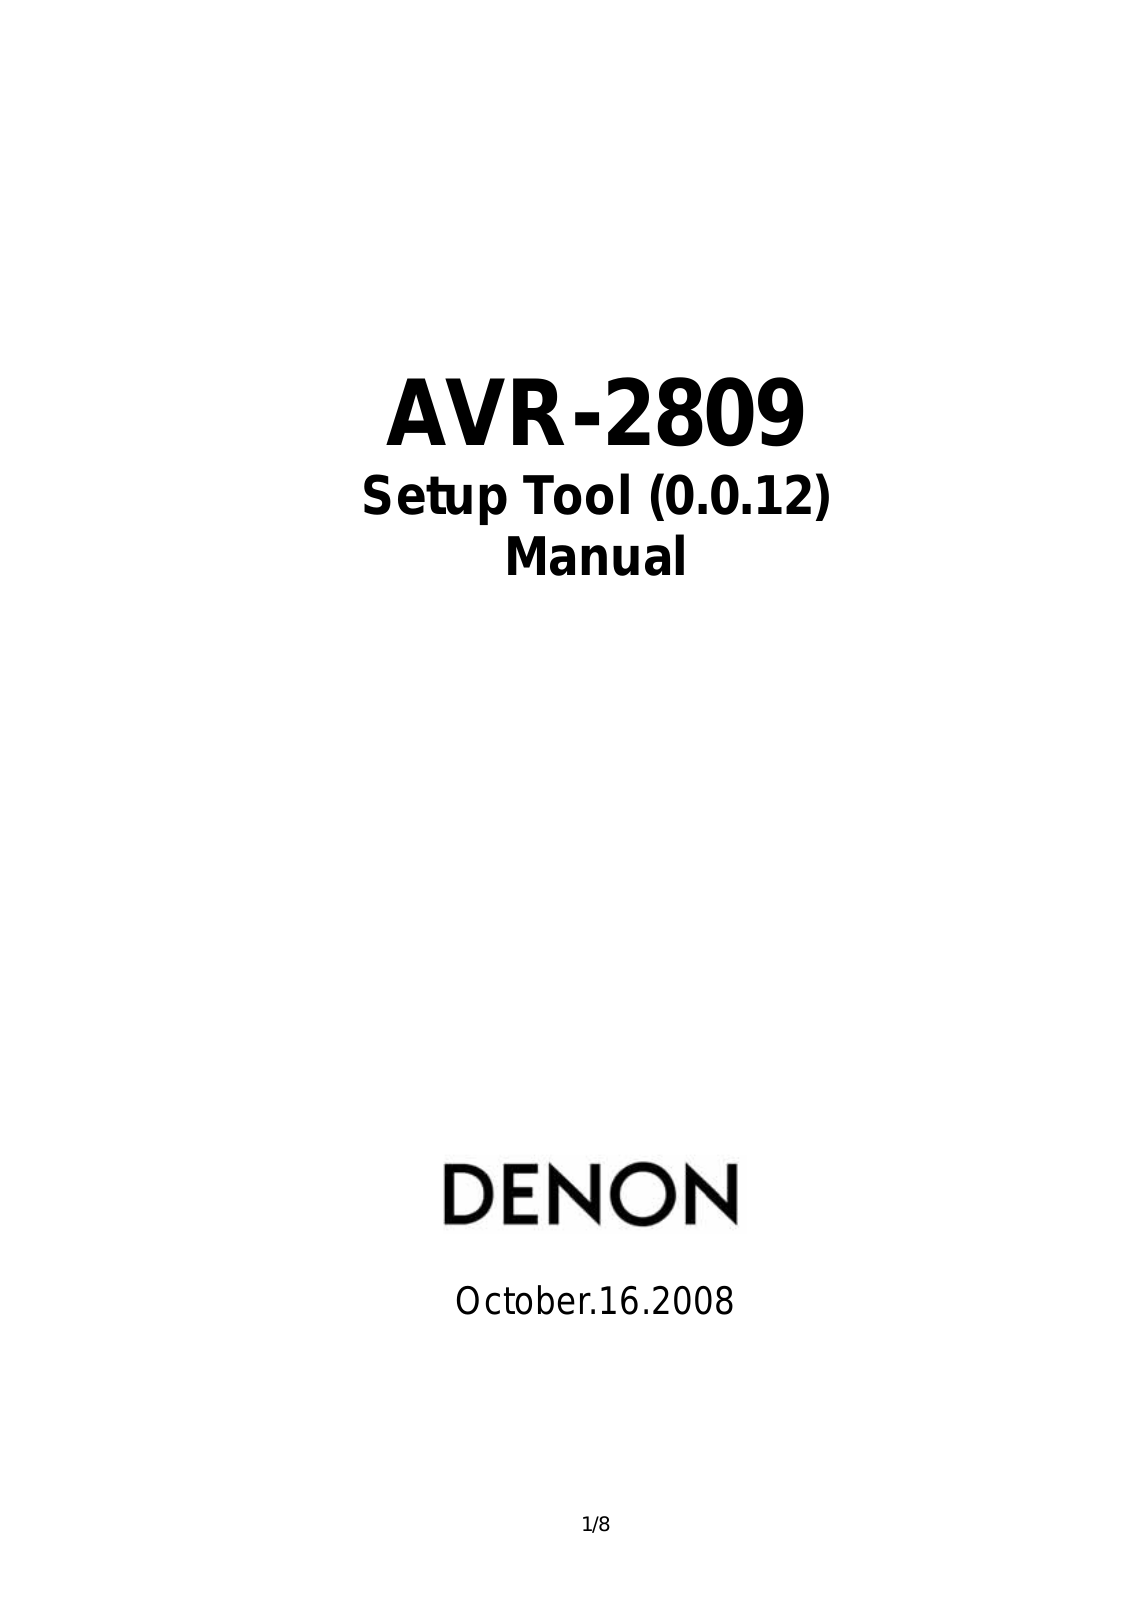 Denon AVR-2809 Service Bulletin